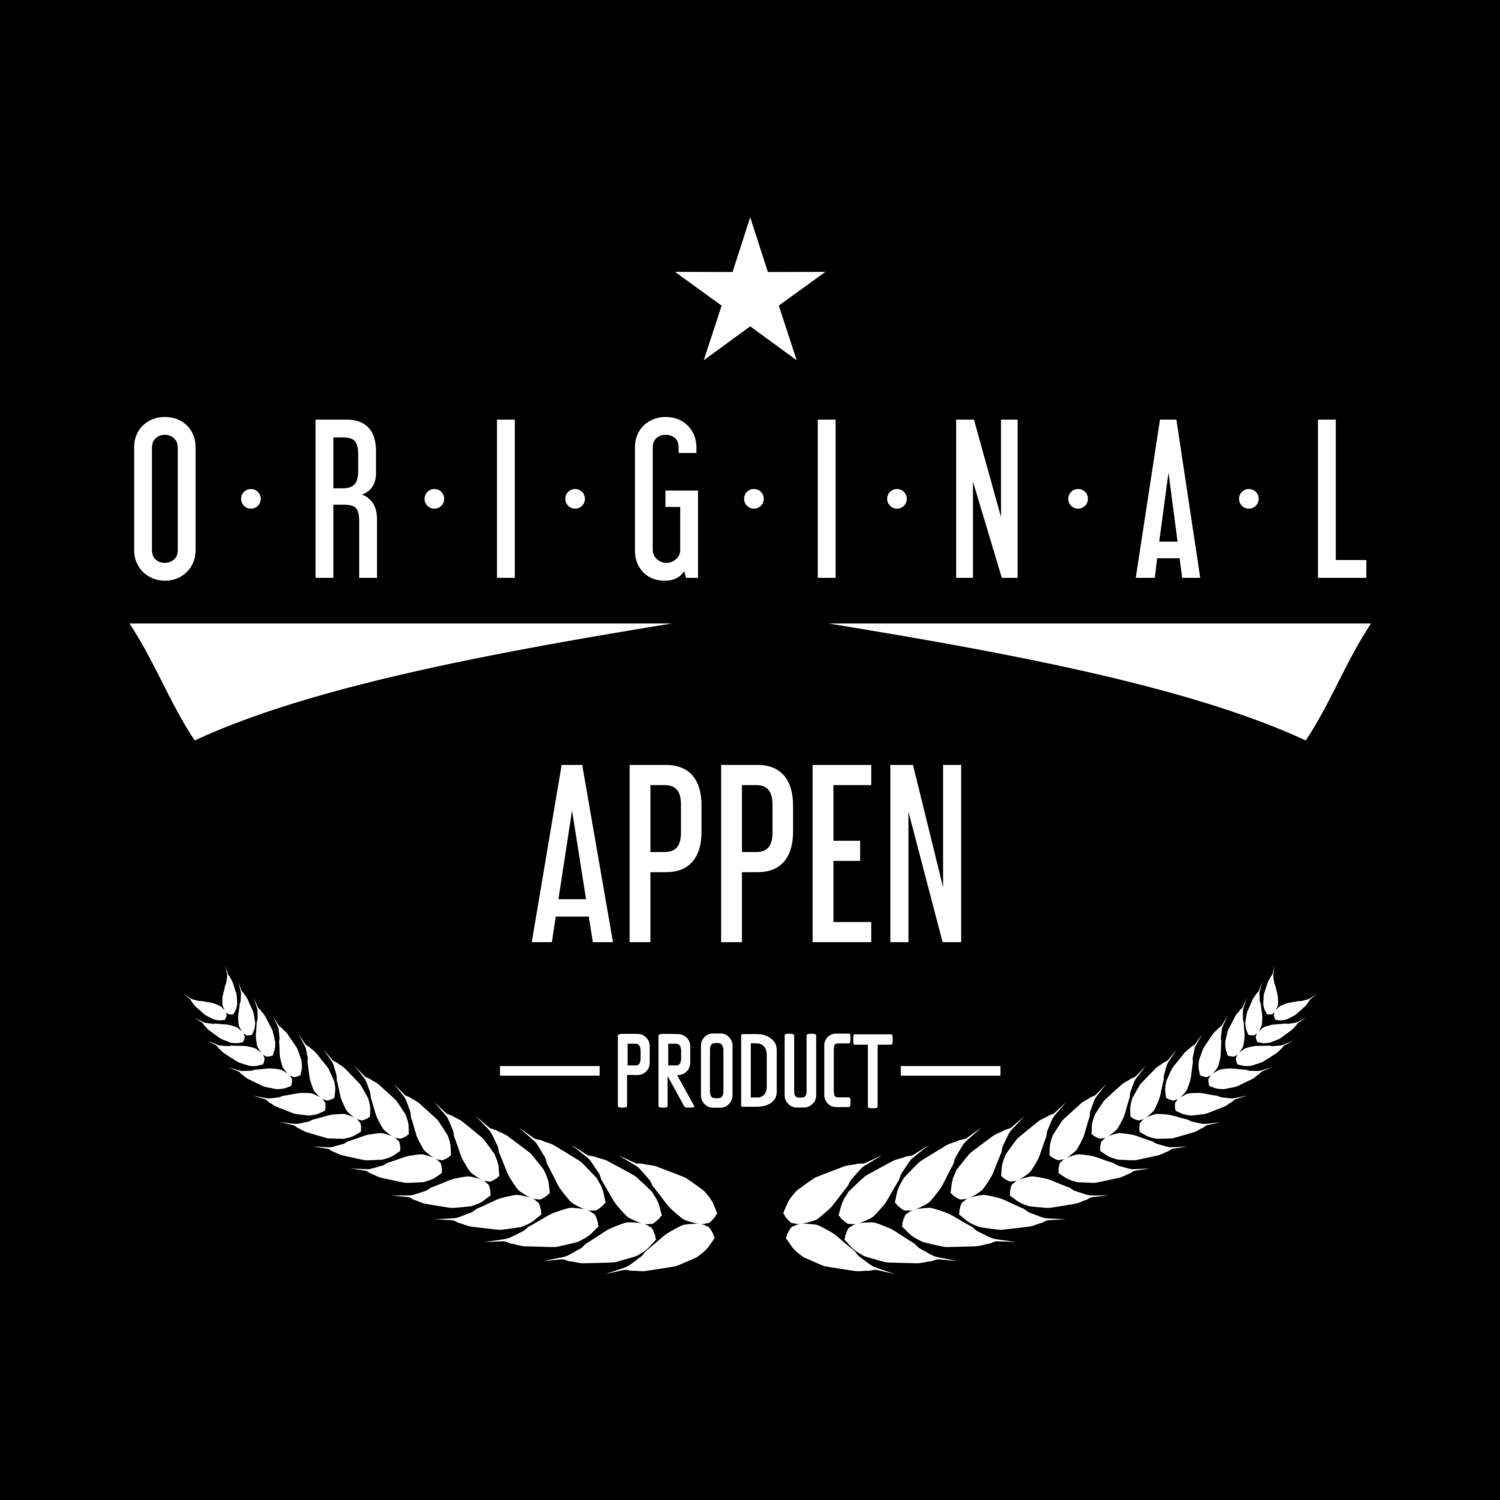 Appen T-Shirt »Original Product«